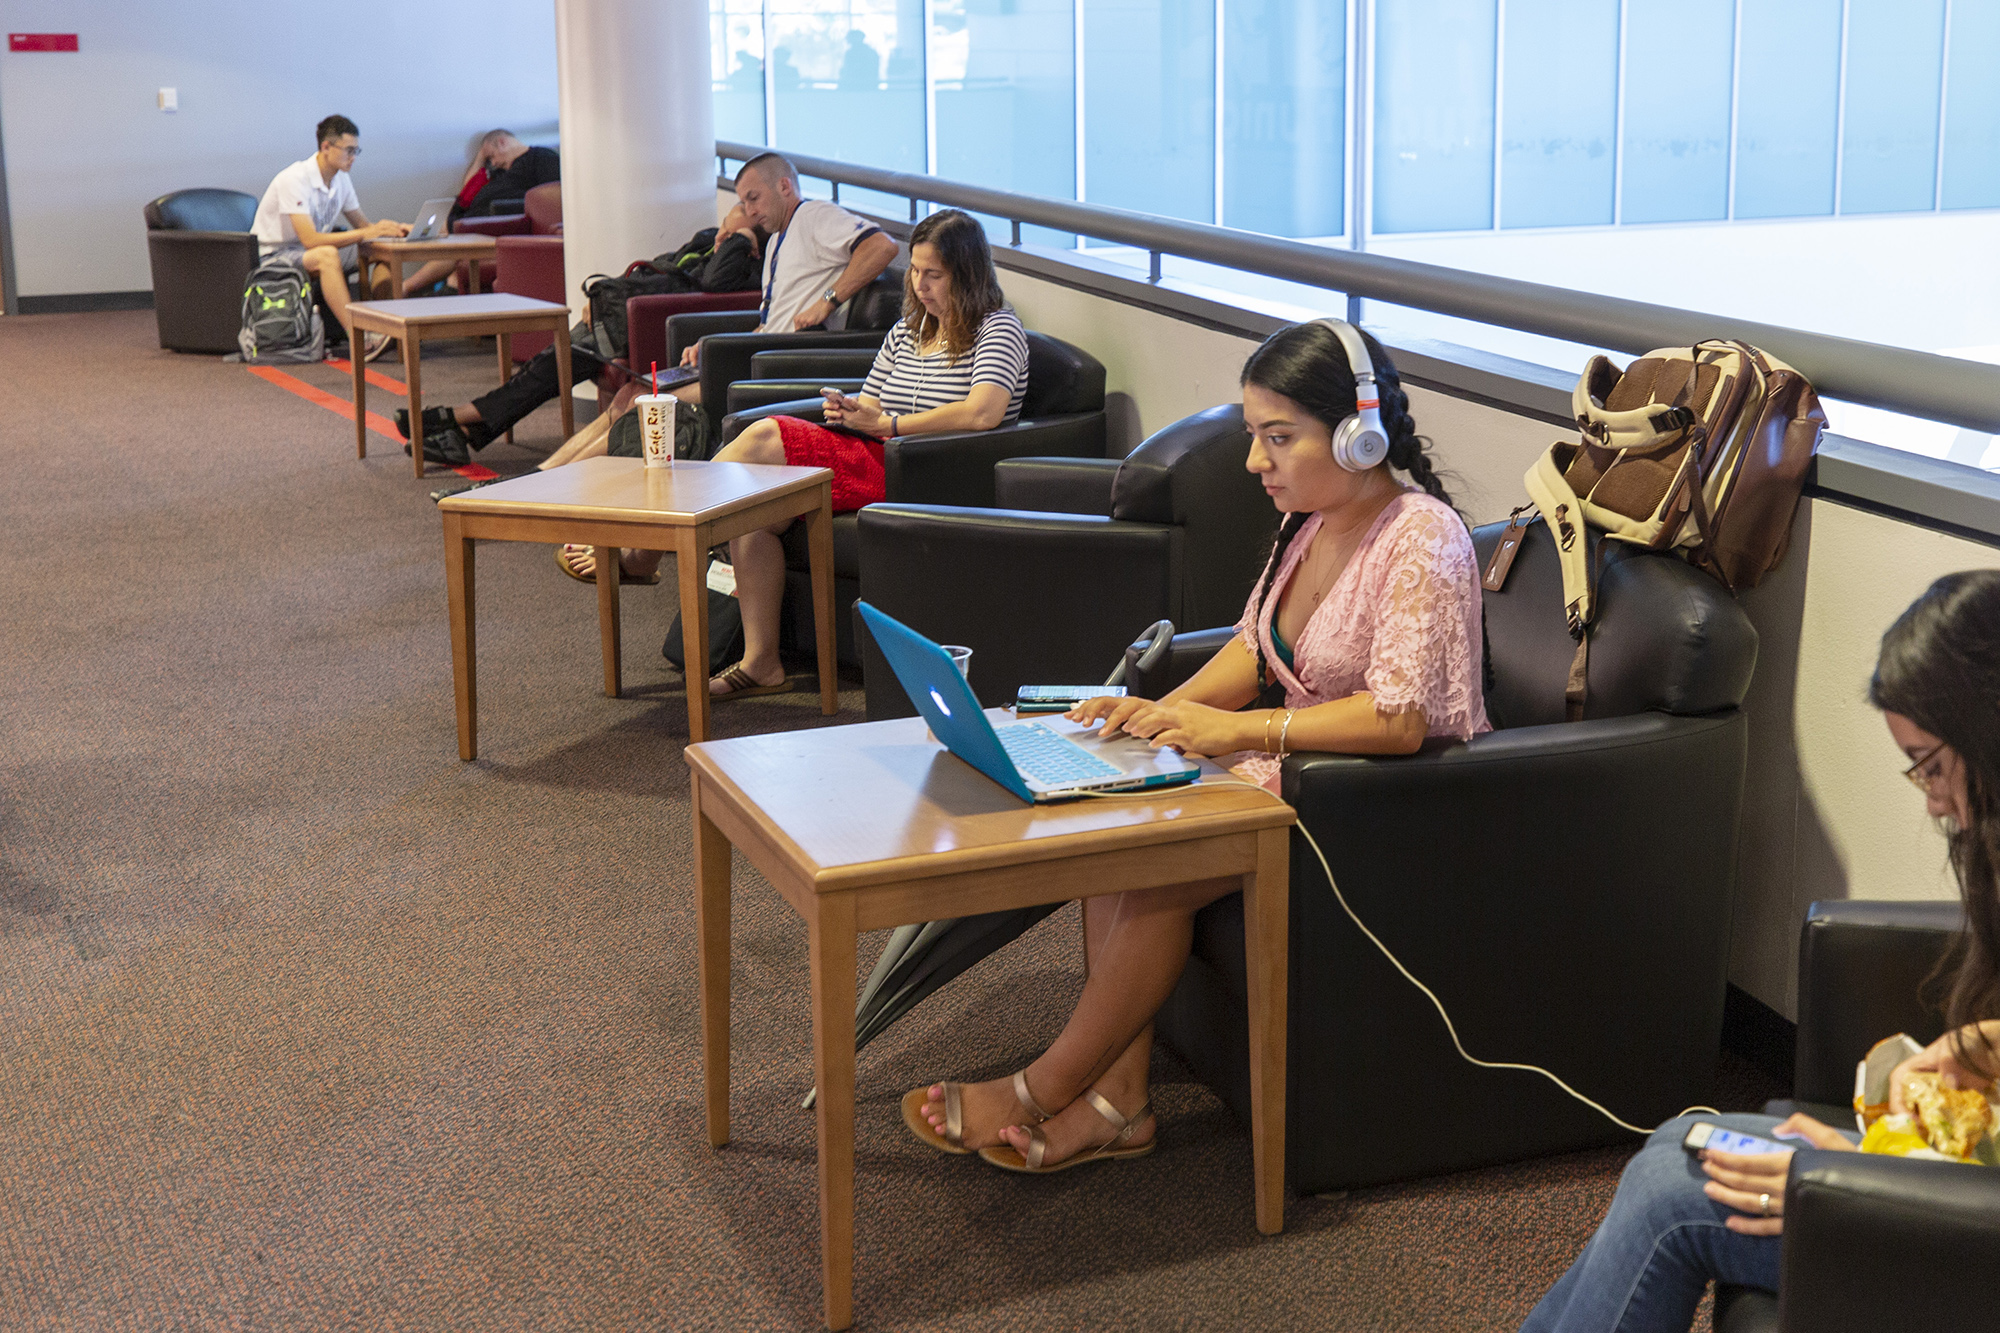 A female student wearing headphones peers down at her laptop.